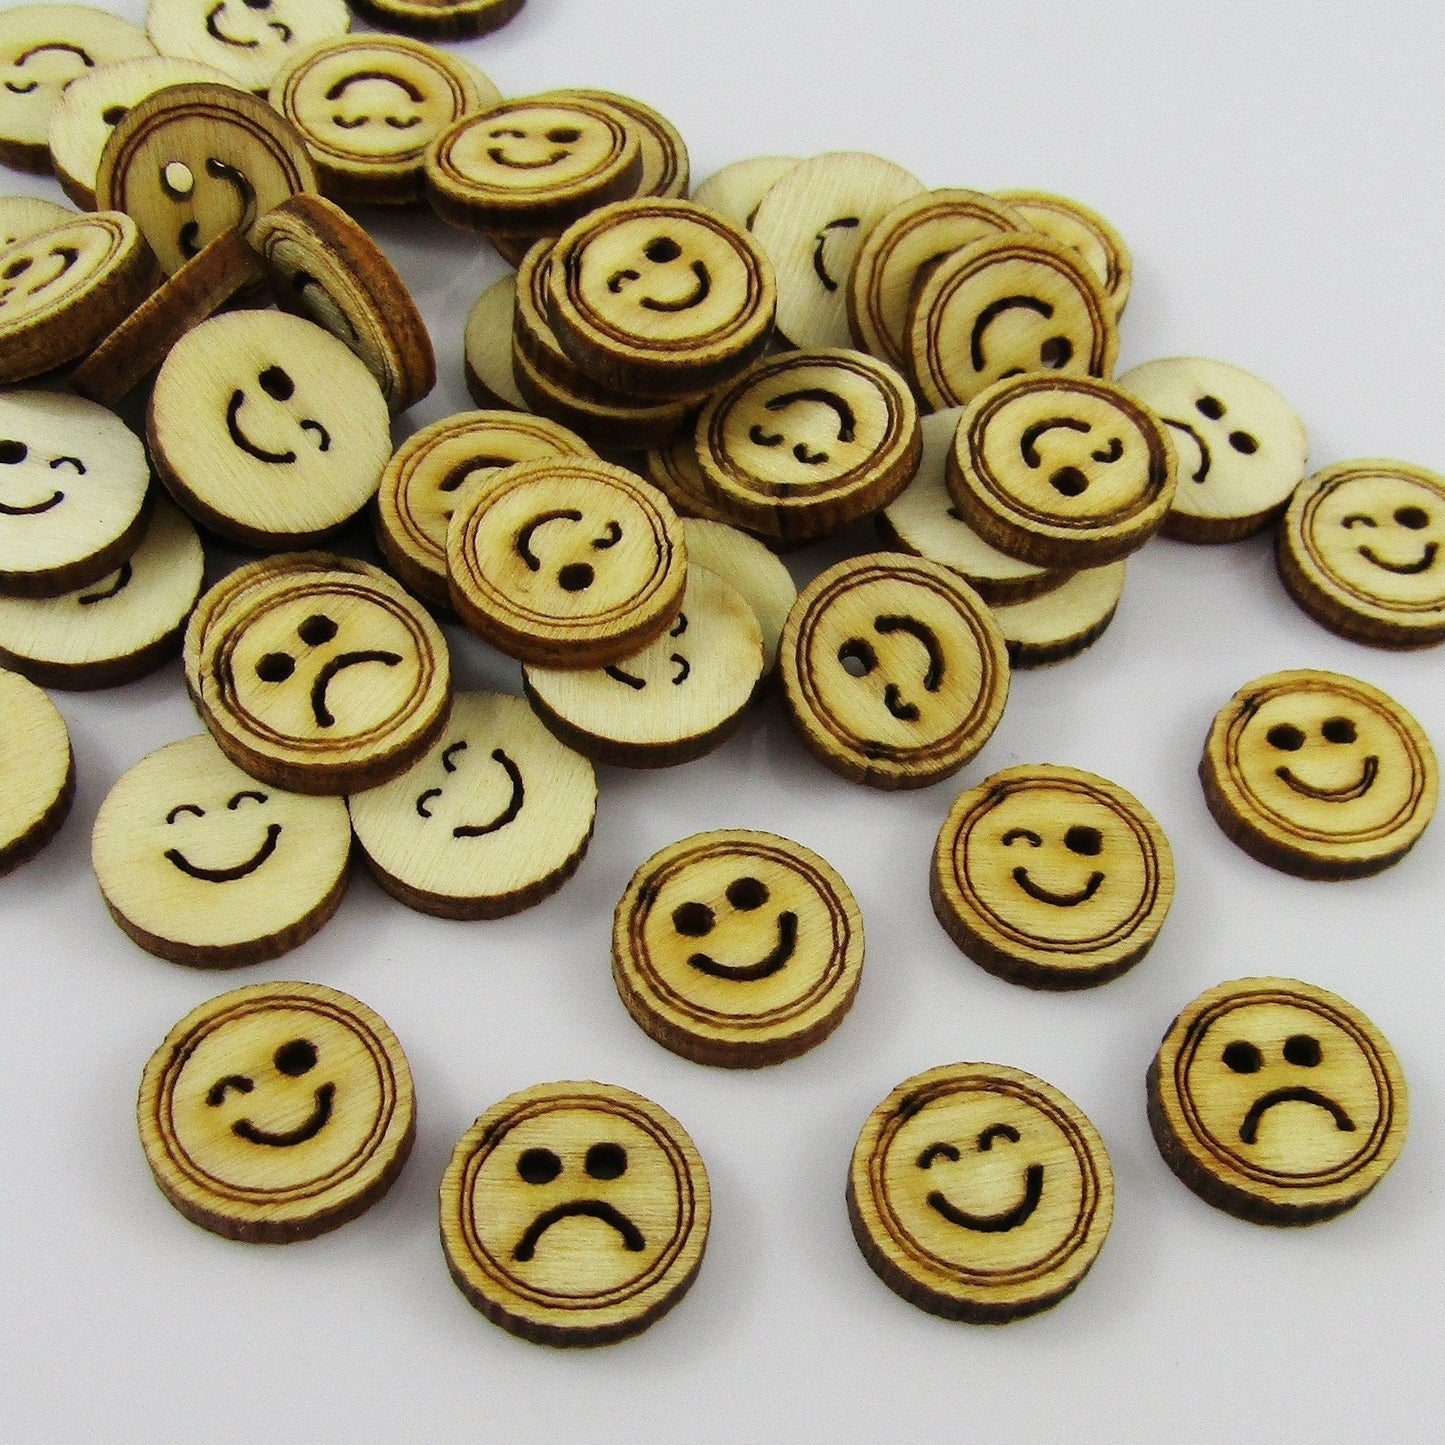 30pcs Laser Cut Wood Emoji Embellishment 13mm Scrapbooking Cards & More!